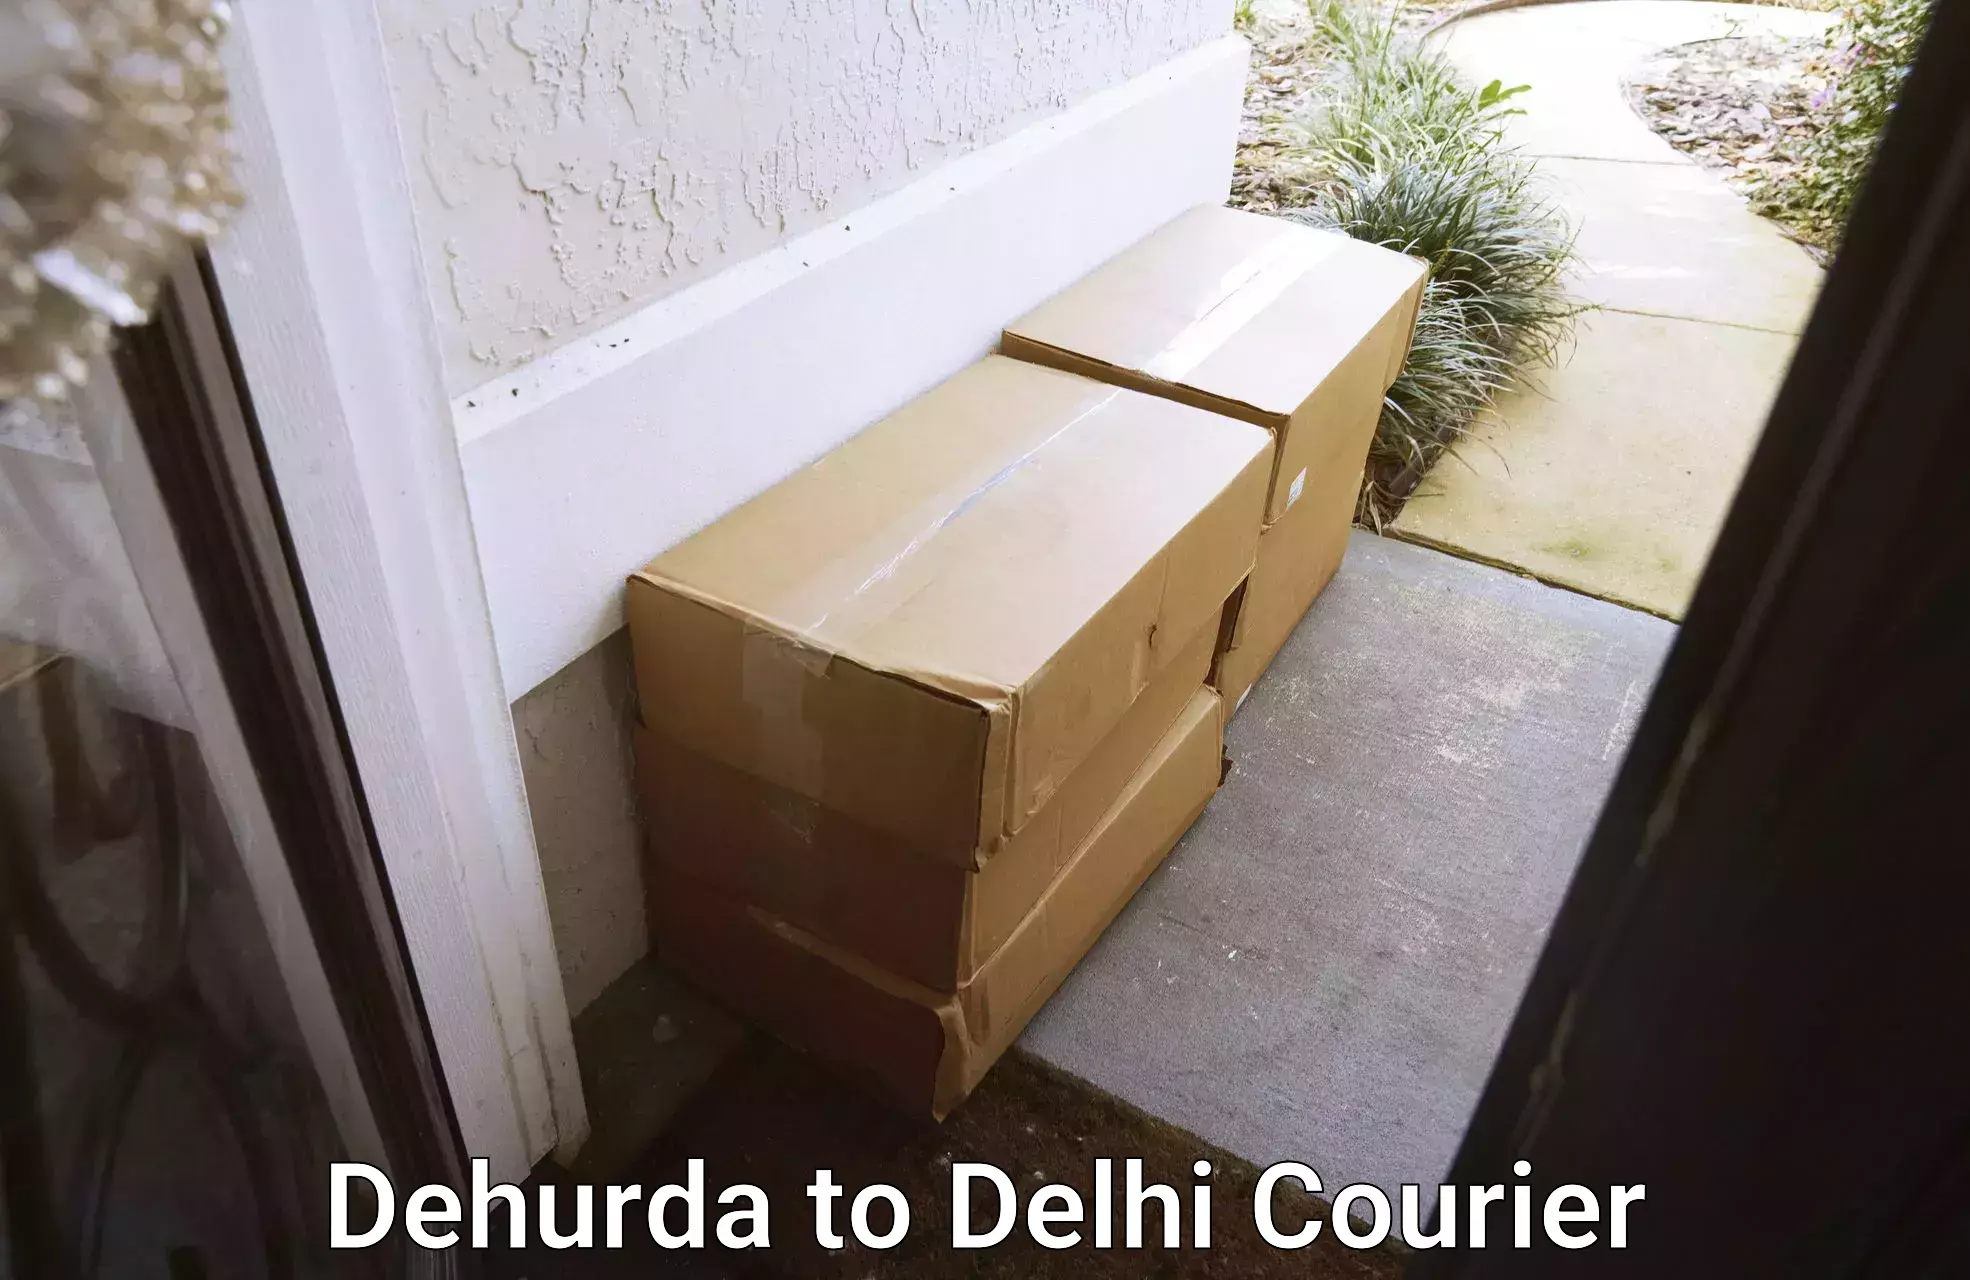 Express package delivery Dehurda to Ramesh Nagar